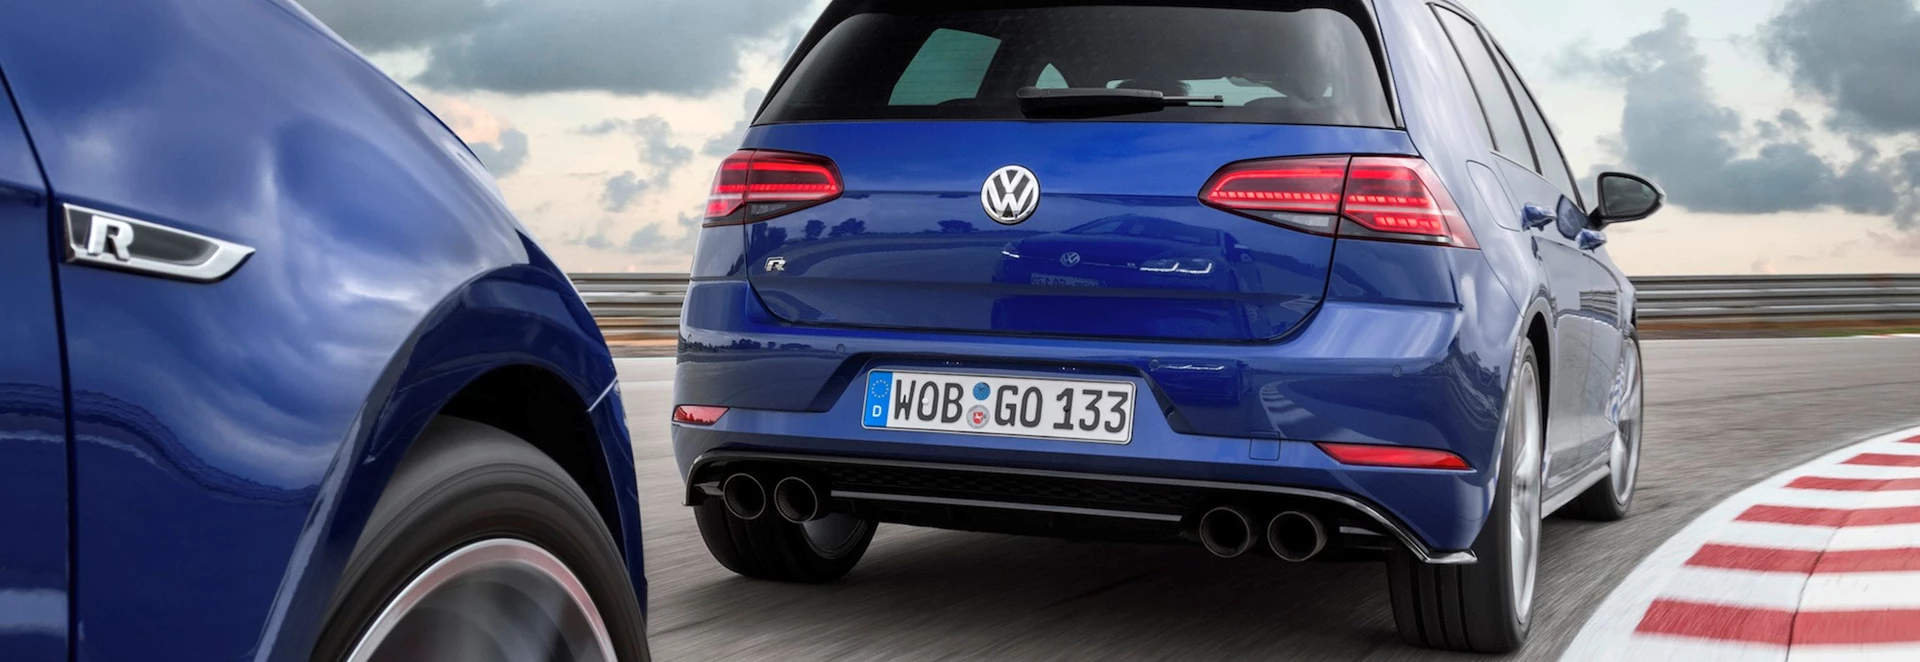 2018 Volkswagen Golf R performance pack